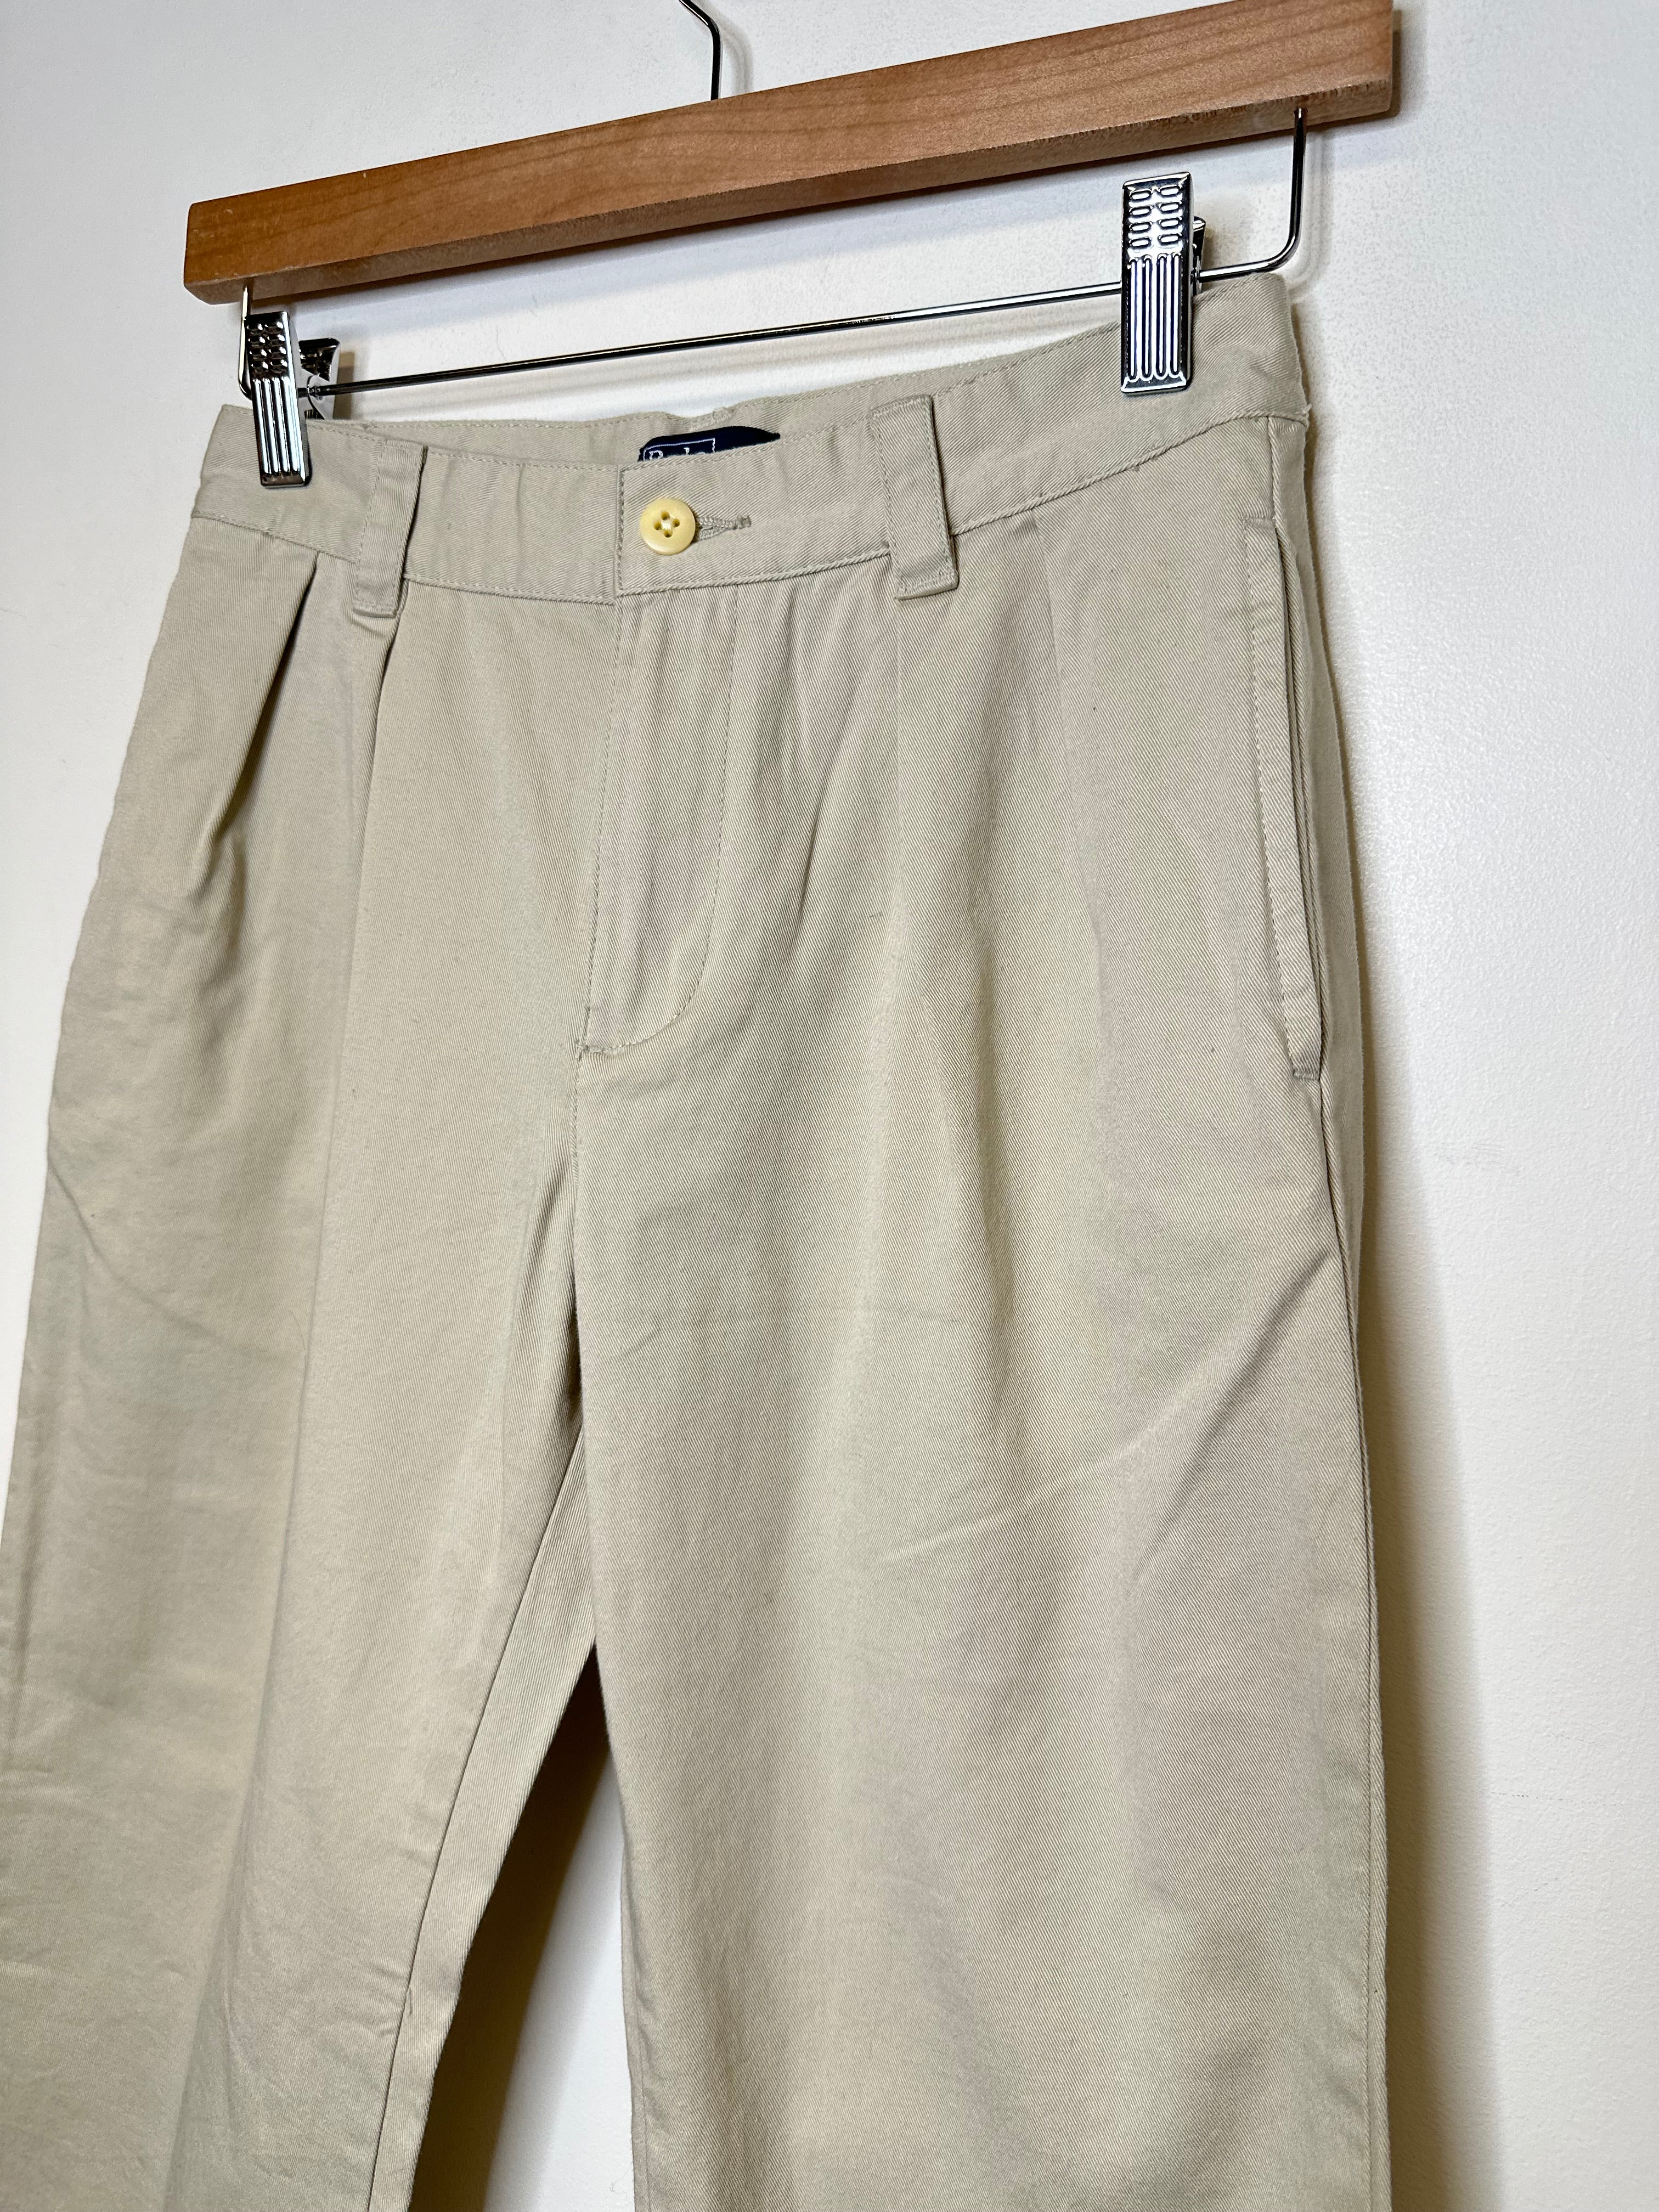 Vintage Beige Chino Pants - S/26